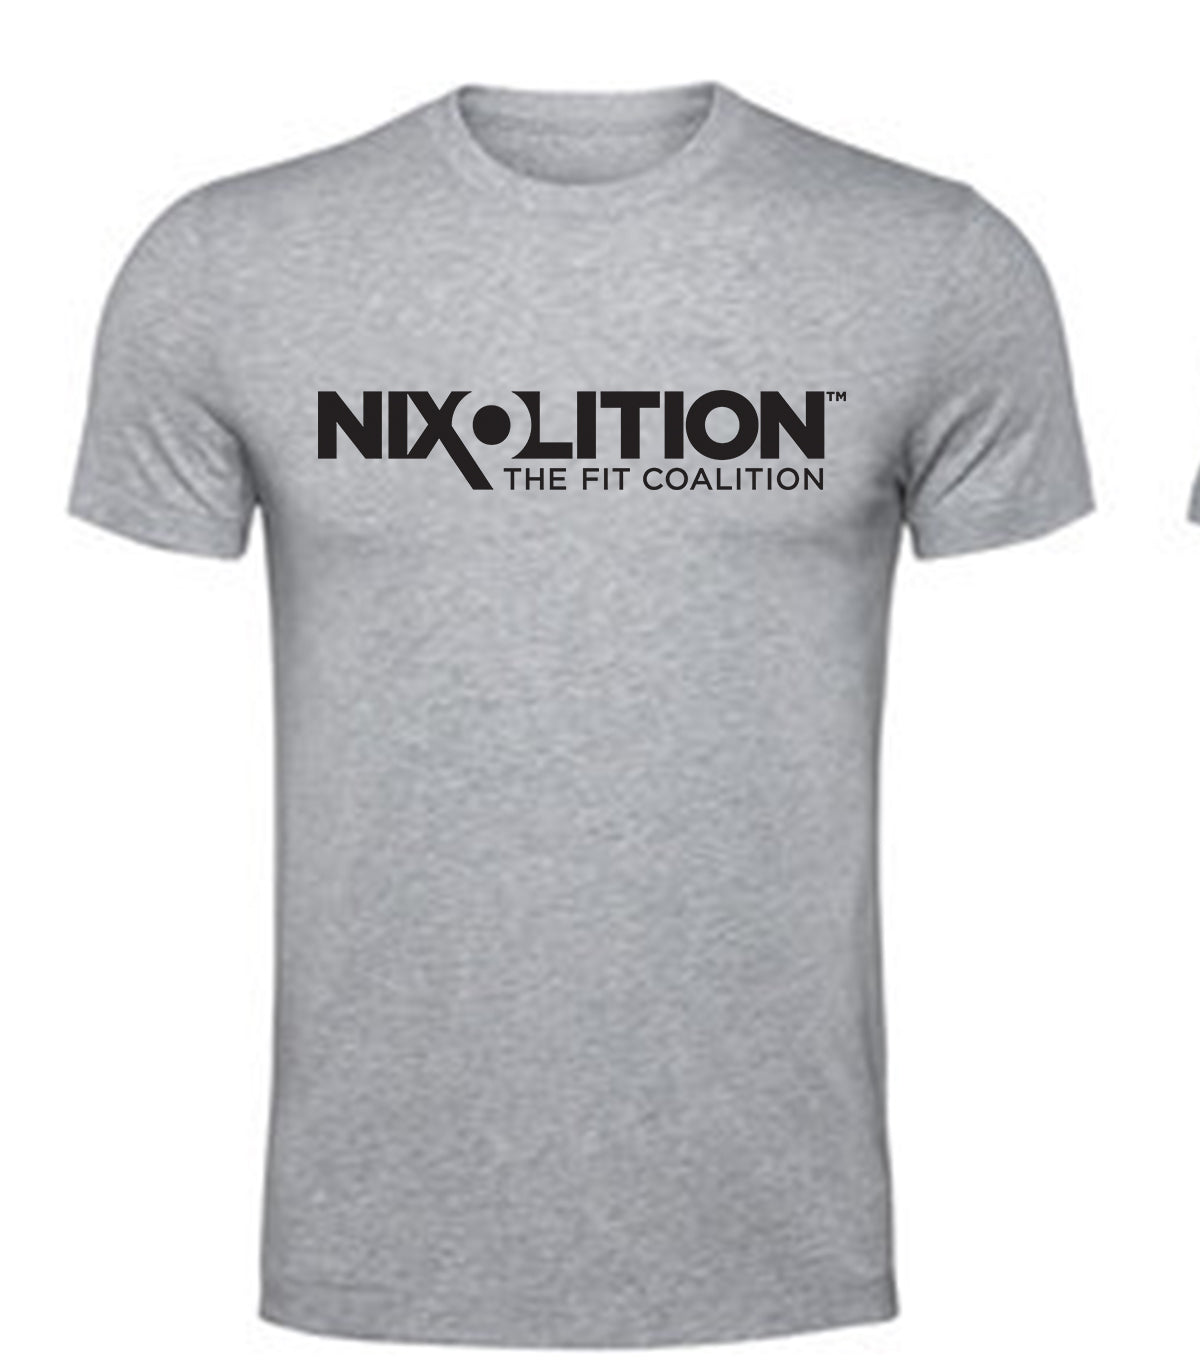 Nixolition T-Shirt Men's Gray